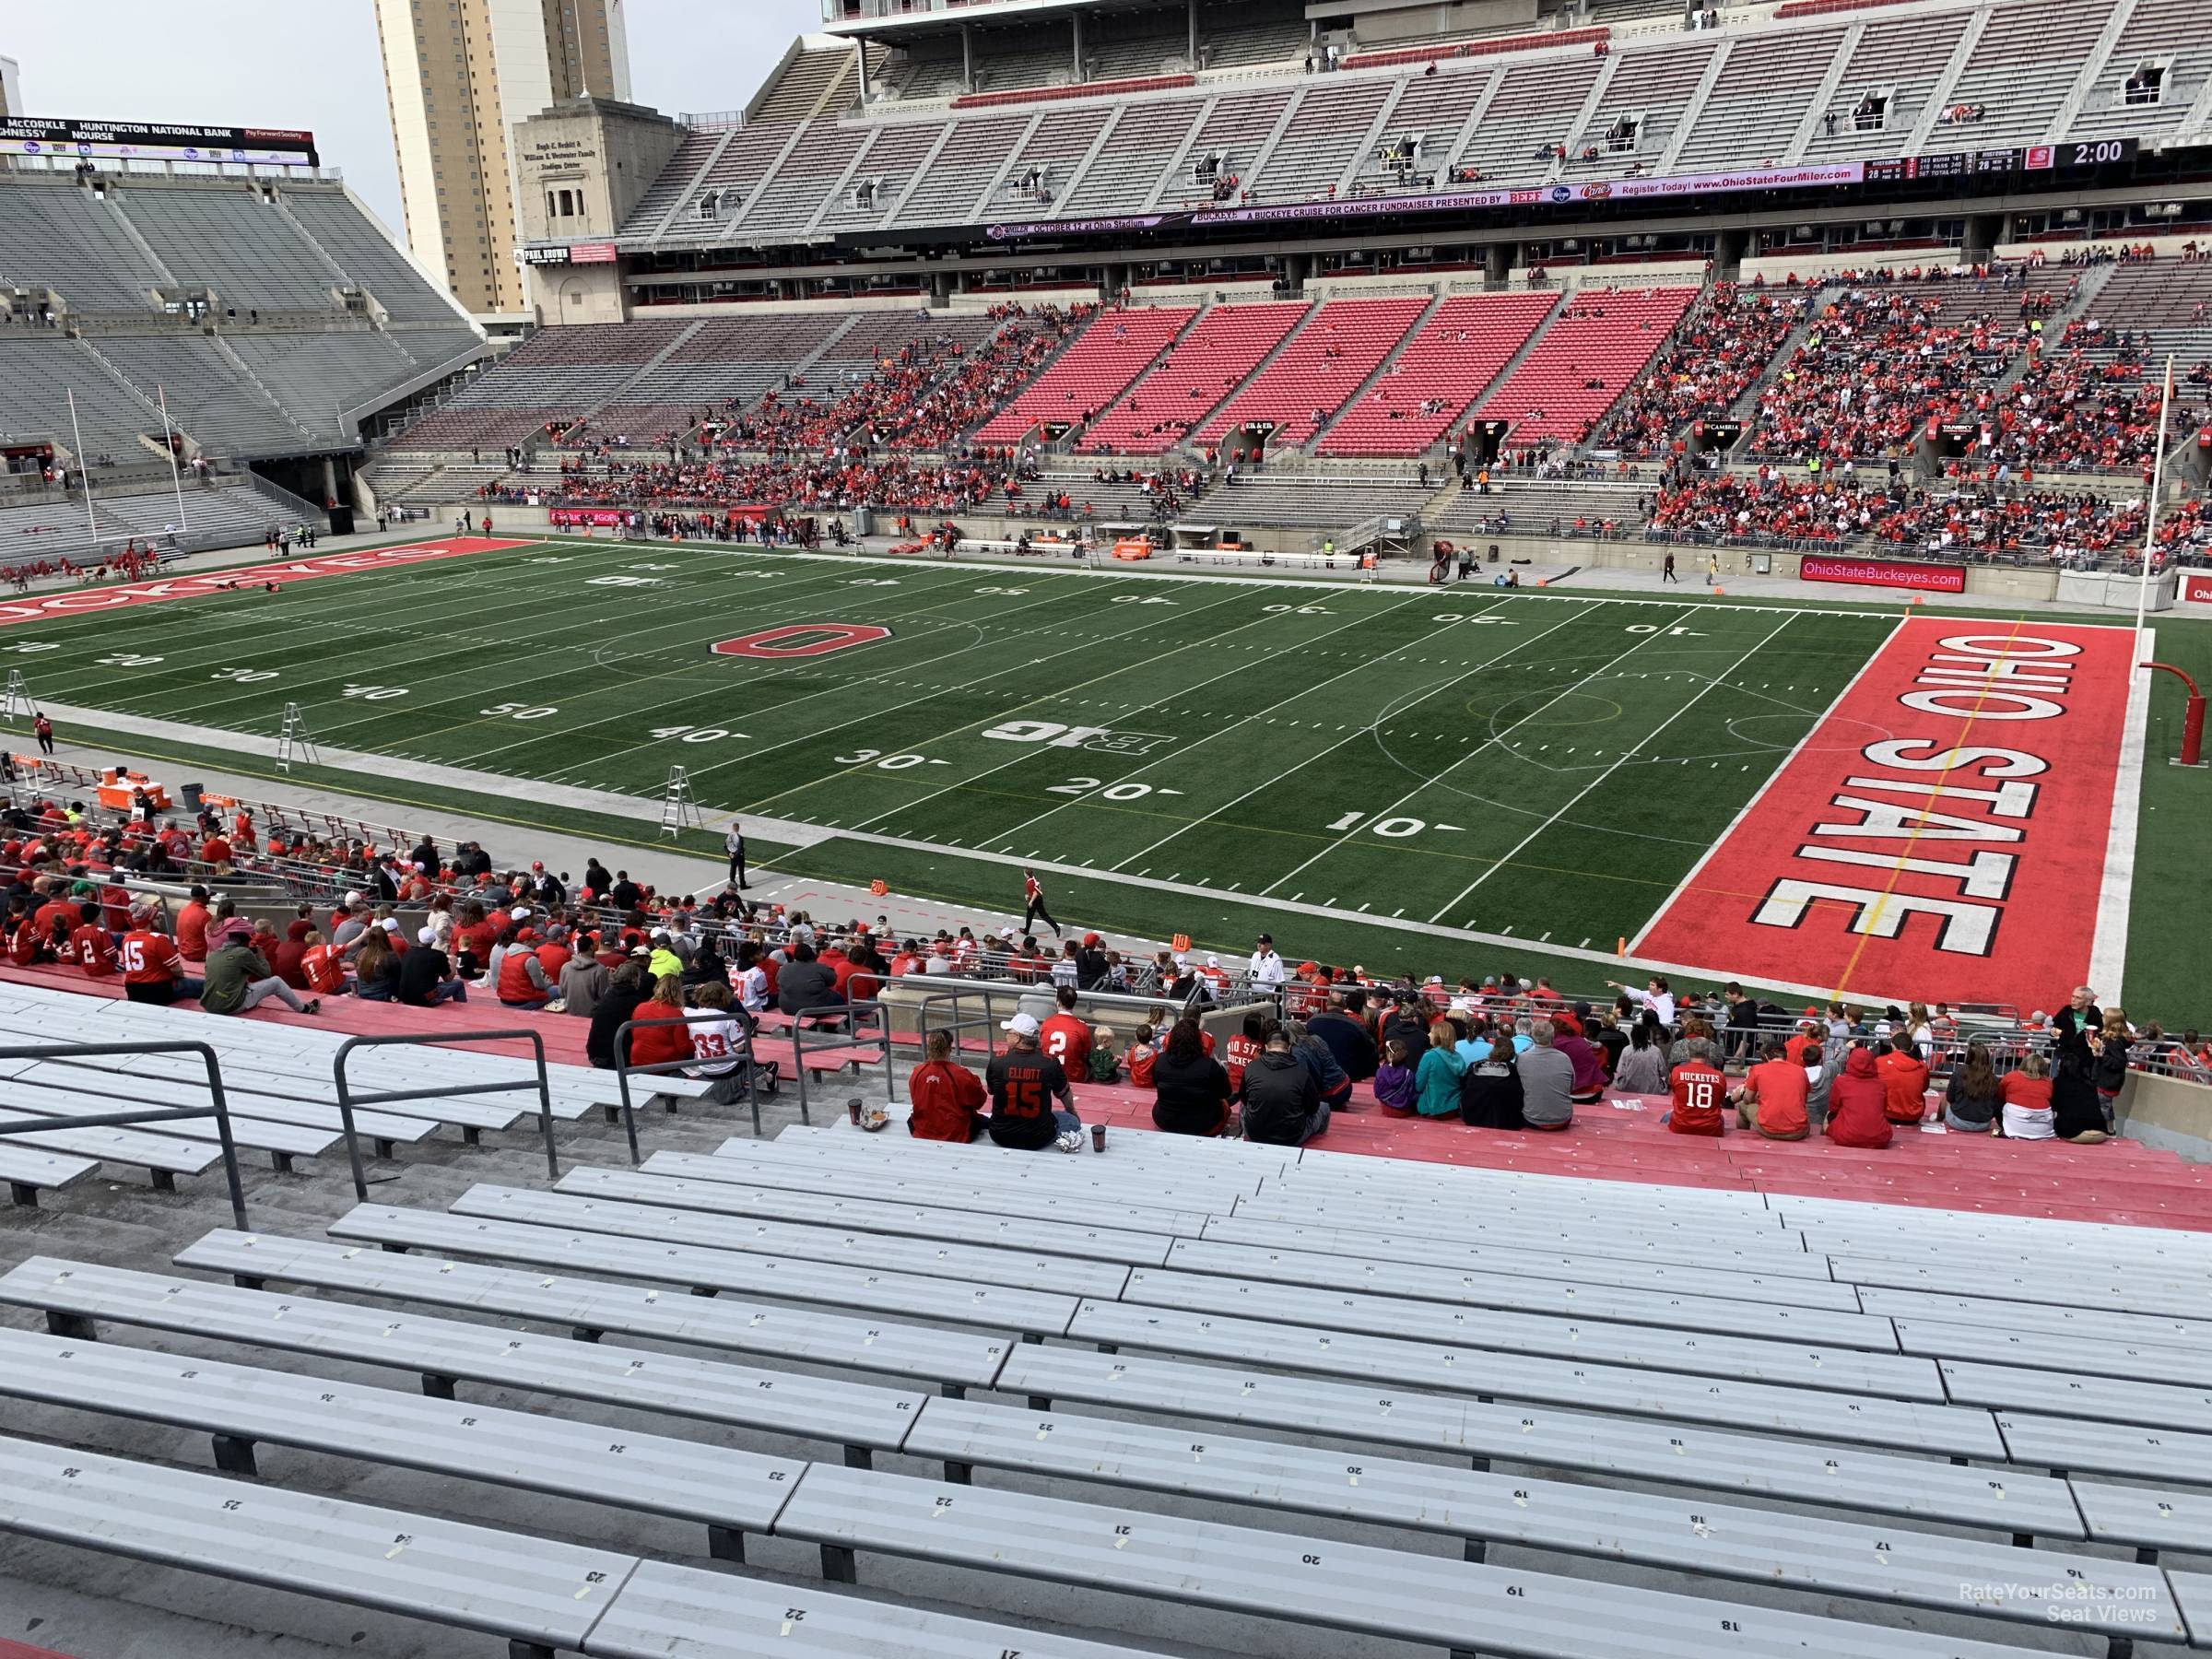 section 16a, row 25 seat view  - ohio stadium